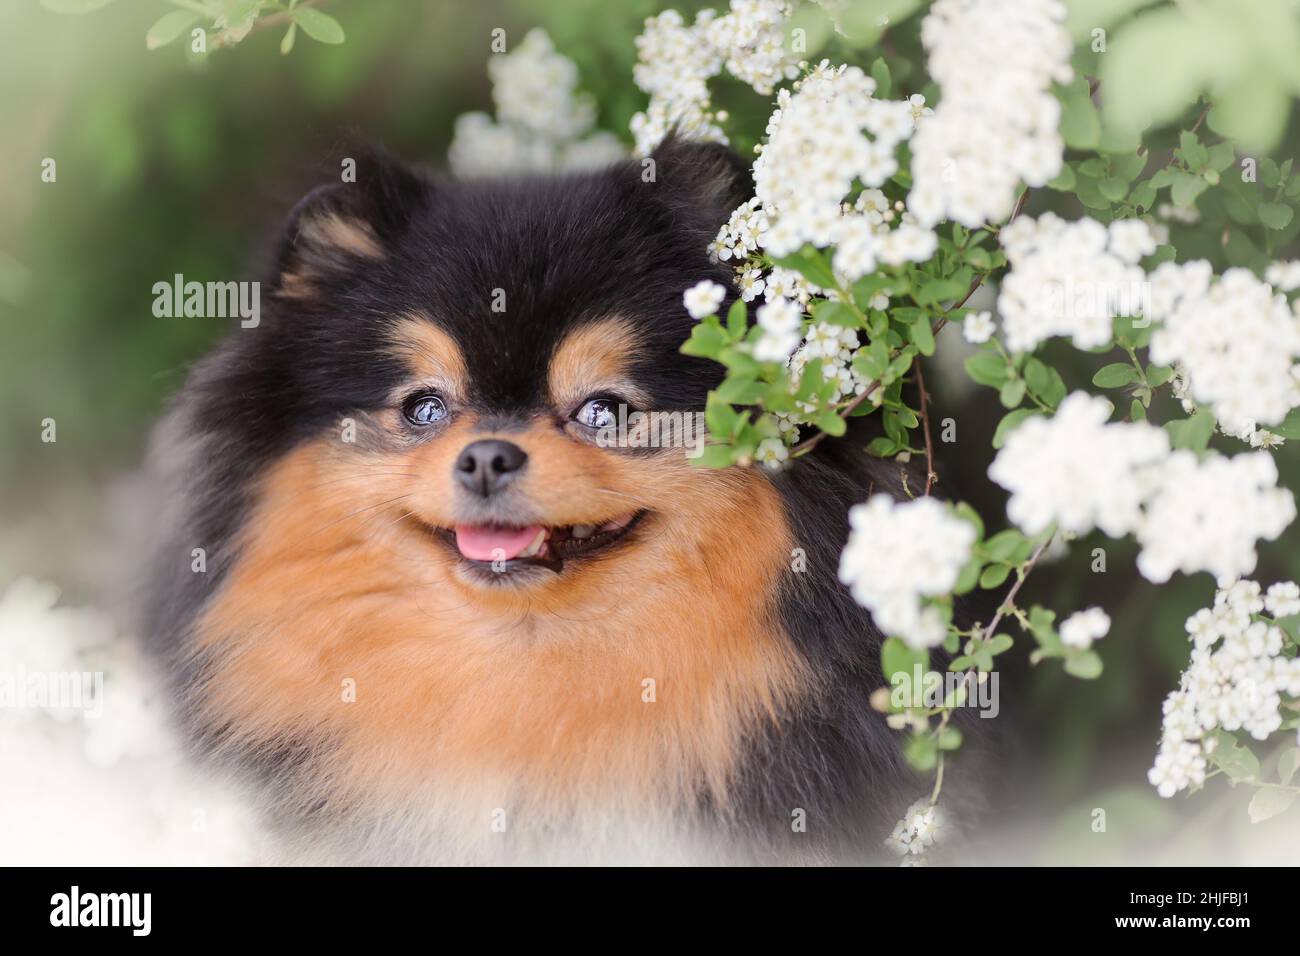 Fluffy pomeranian spitz dog smiling among white spring or summer flowers Stock Photo